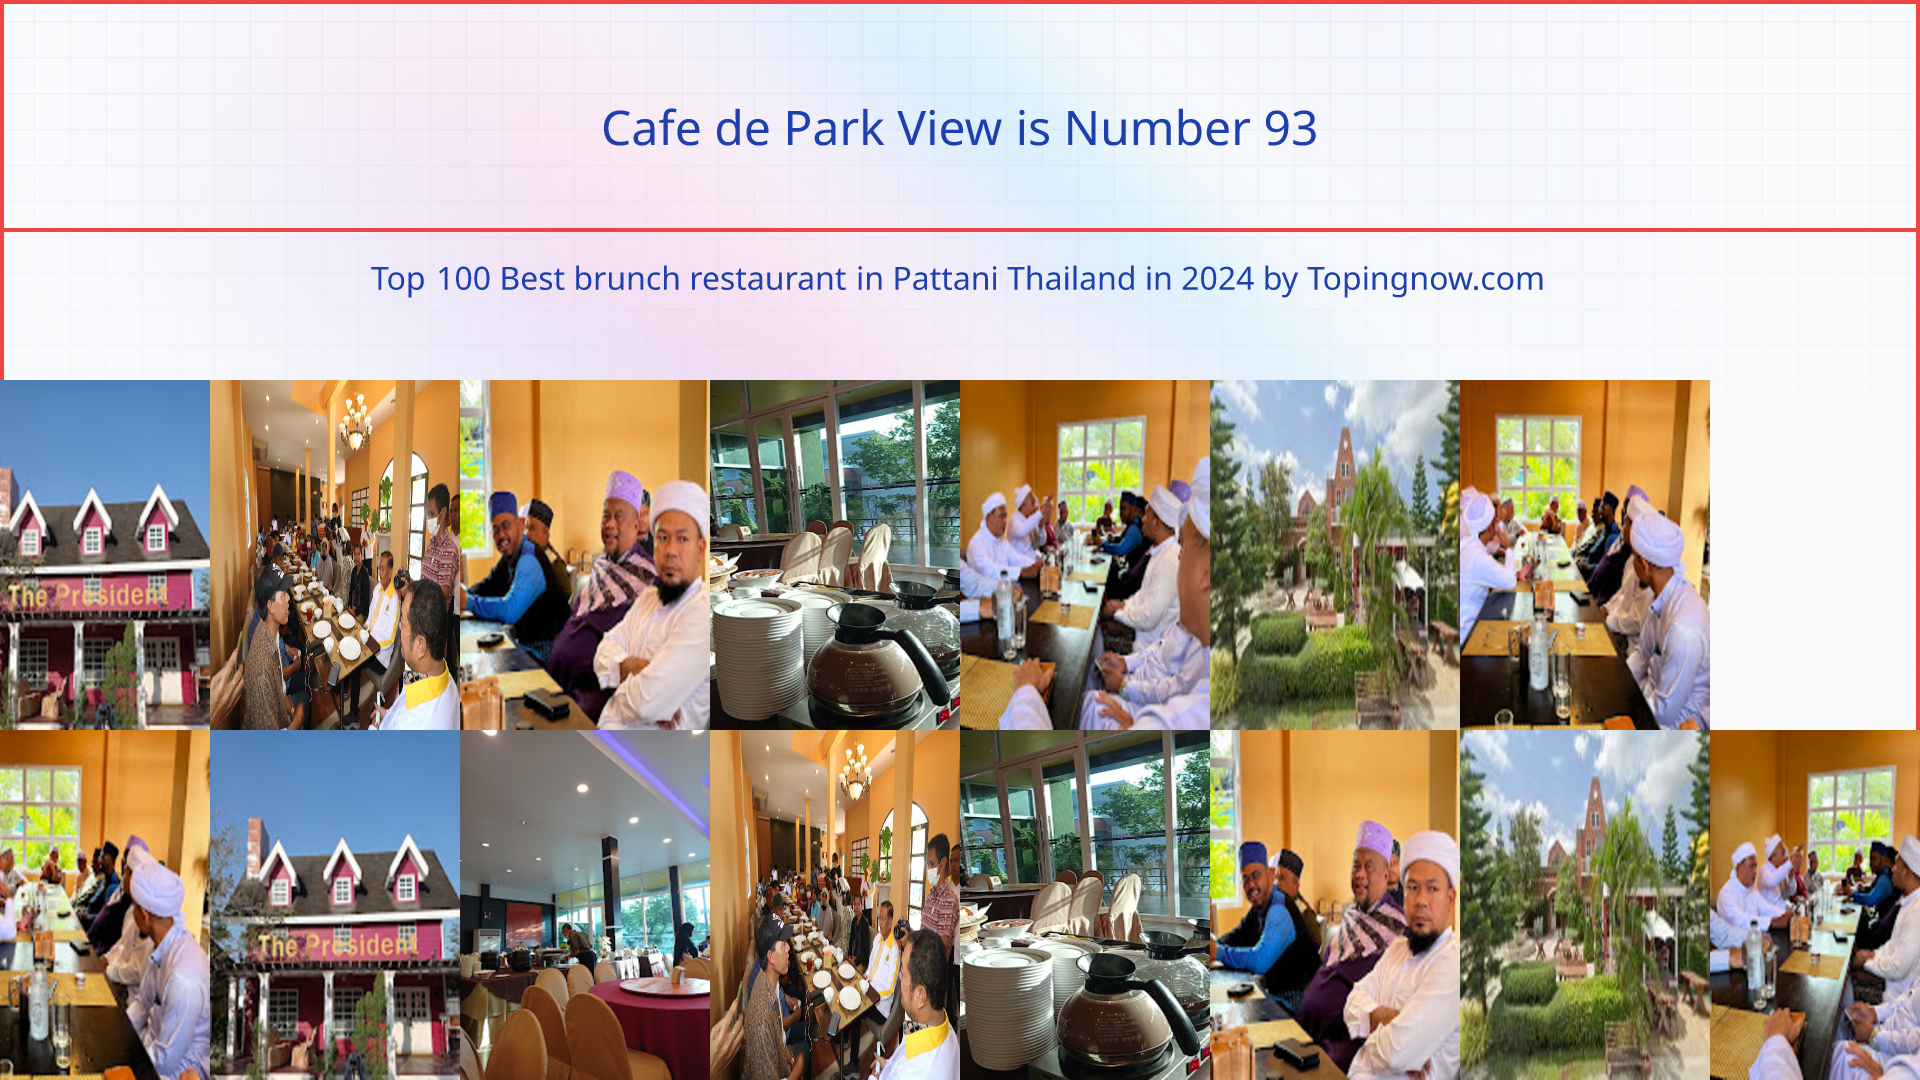 Cafe de Park View: Top 100 Best brunch restaurant in Pattani Thailand in 2024